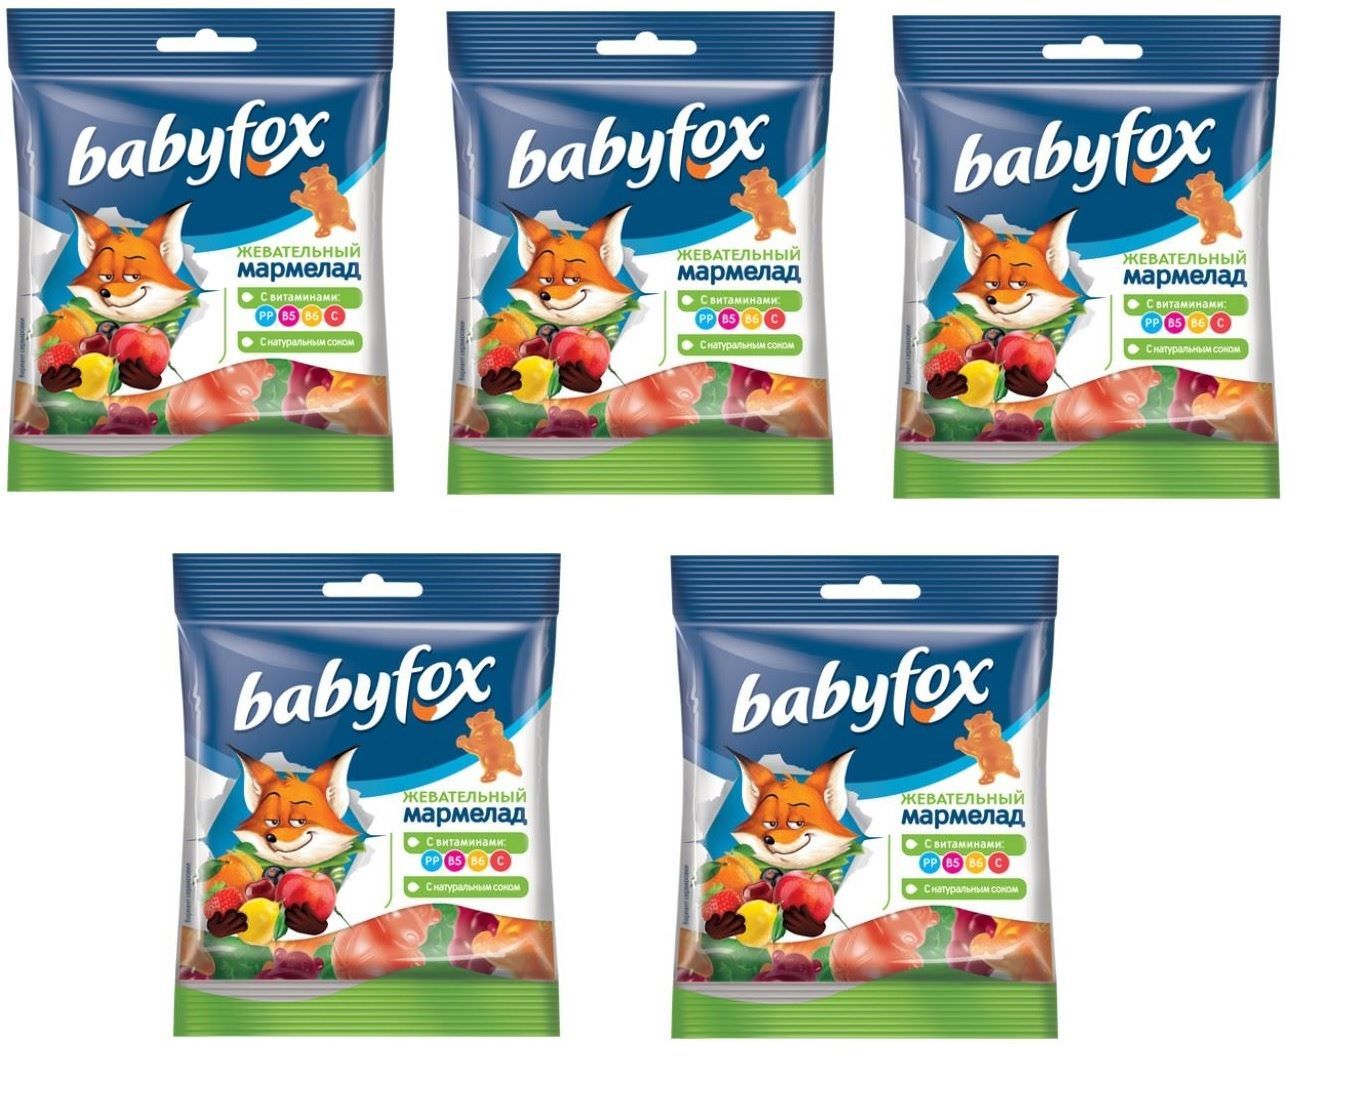 Marmalade fox. Мармелад Babyfox, 30г. Baby Fox мармелад. Мармеладки с лисой. Мармелад с витаминами.